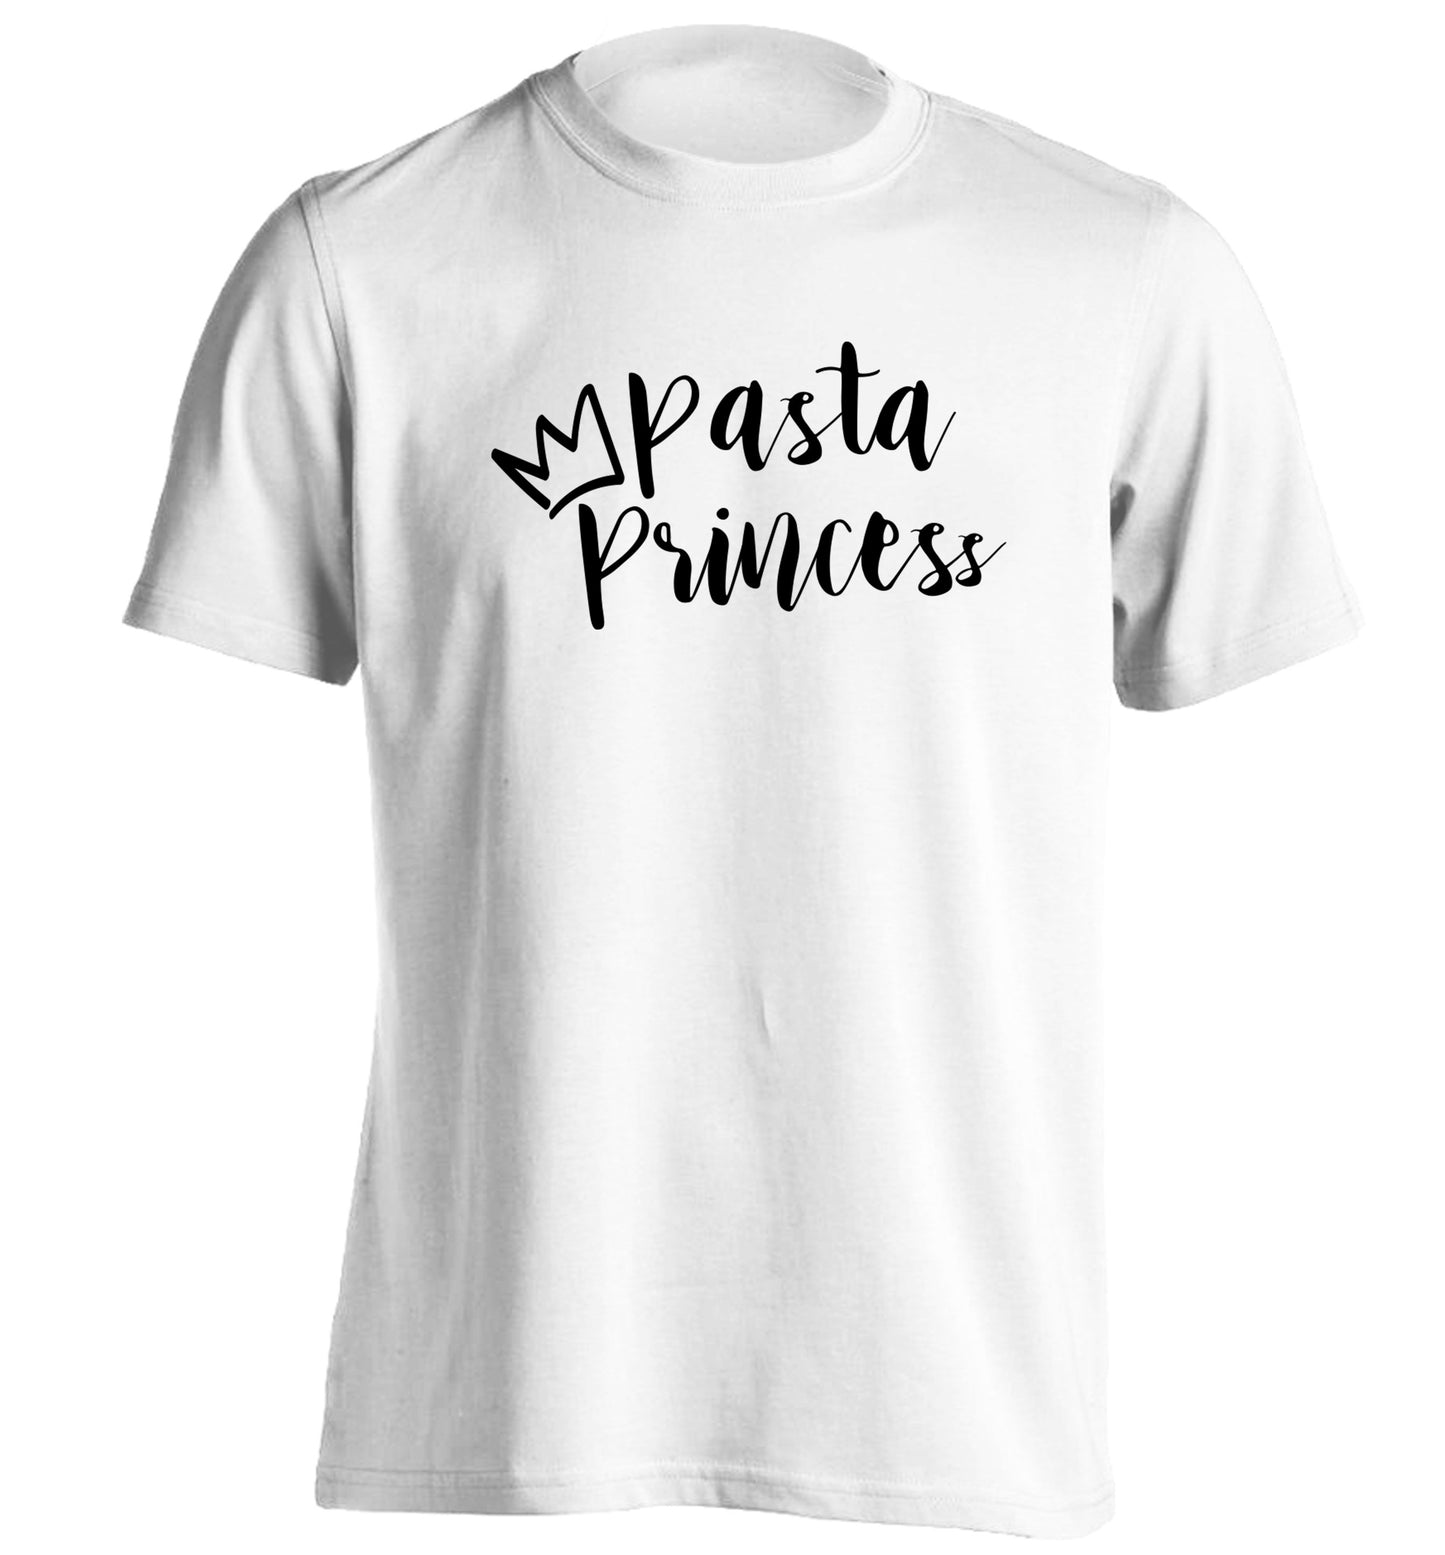 Pasta Princess adults unisex white Tshirt 2XL